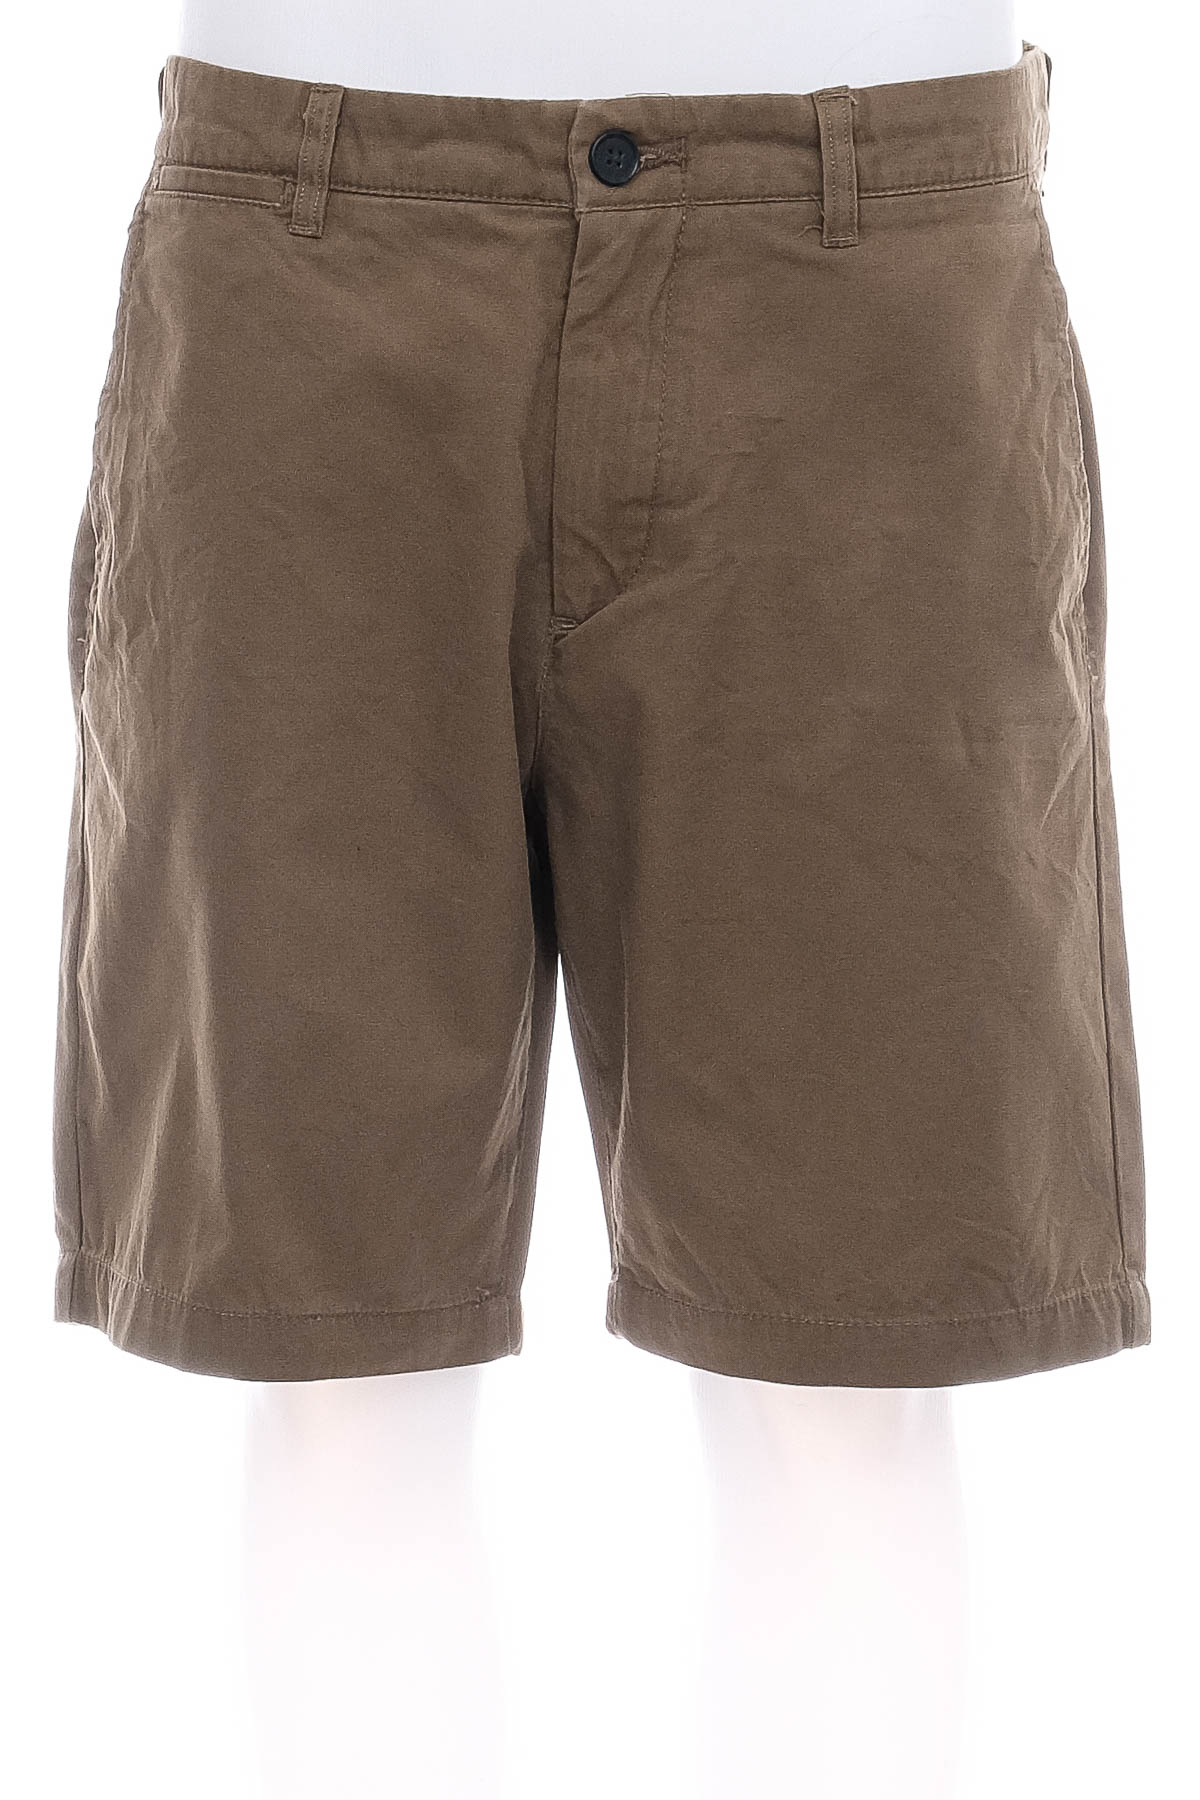 Men's shorts - H&M - 0